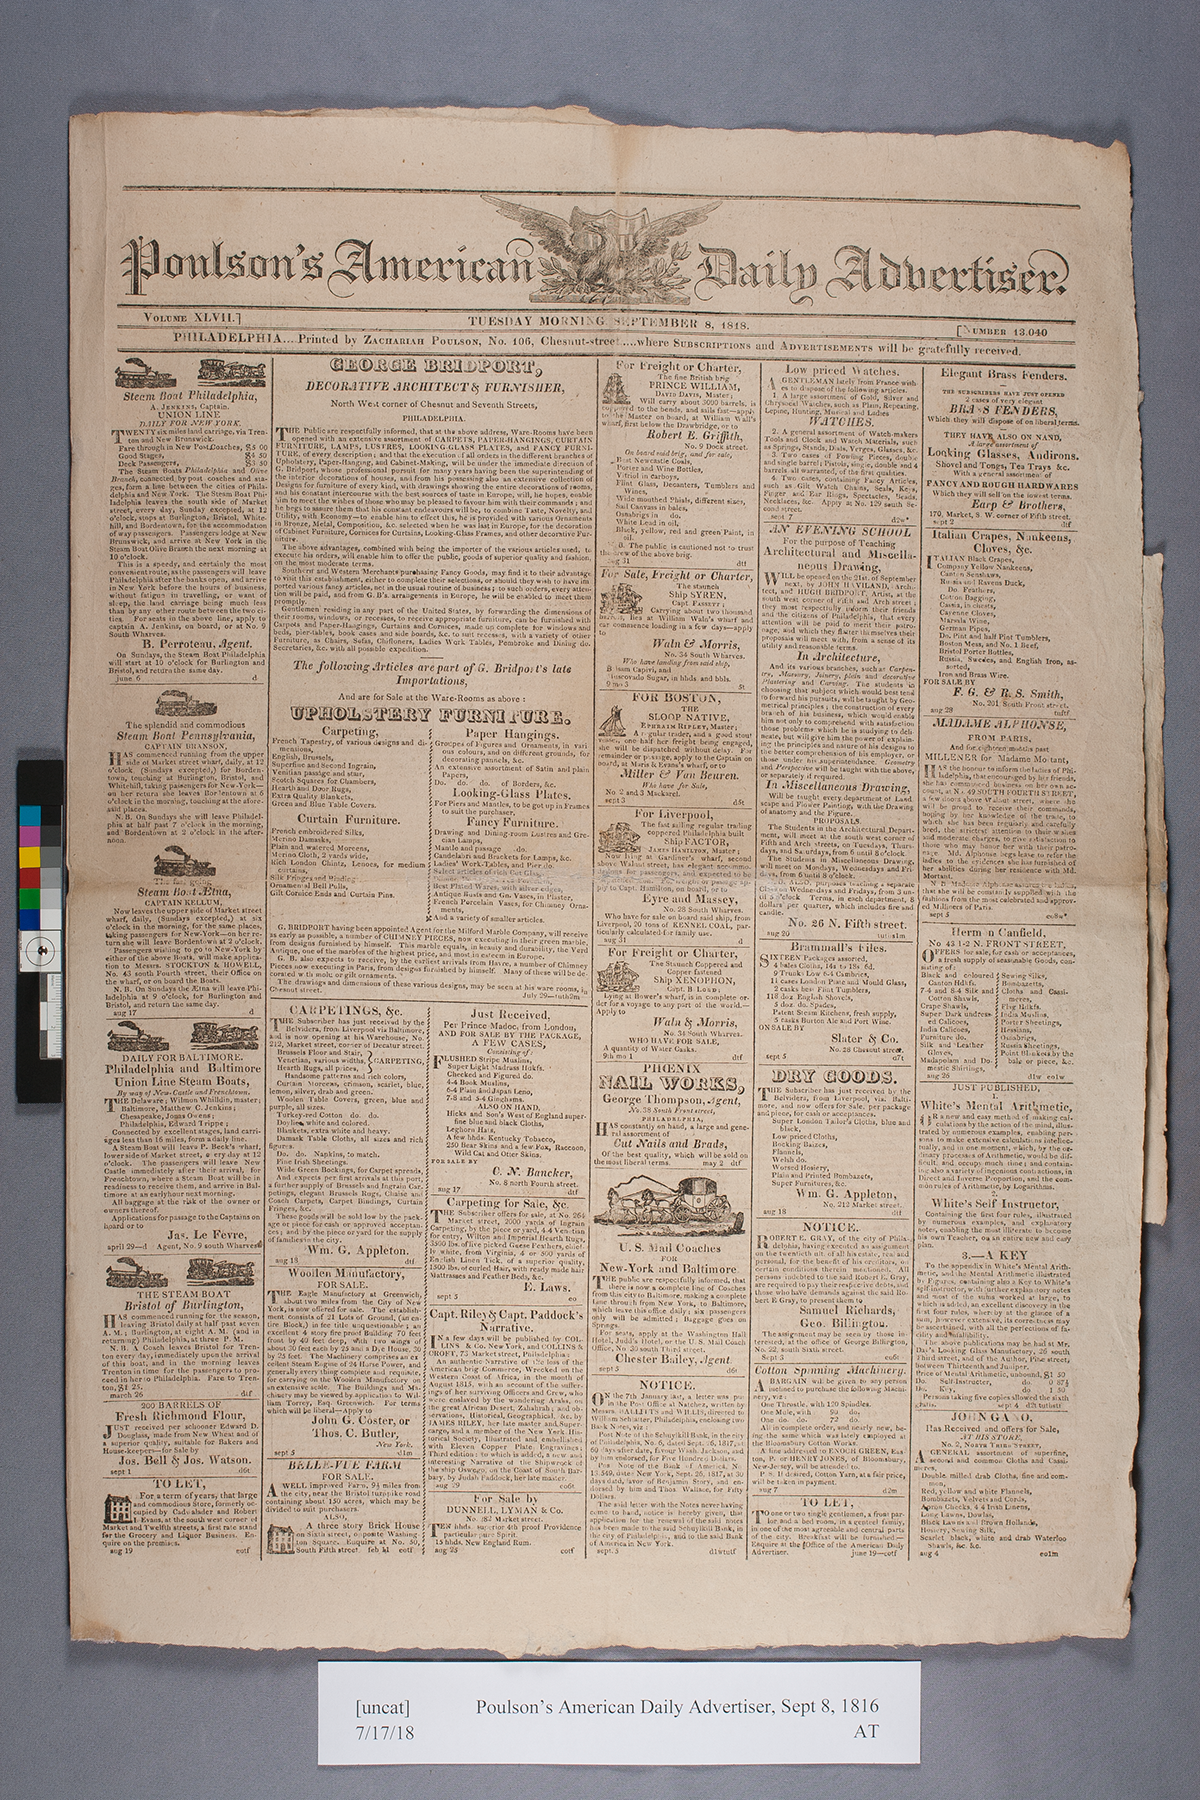 newspaper after conservation